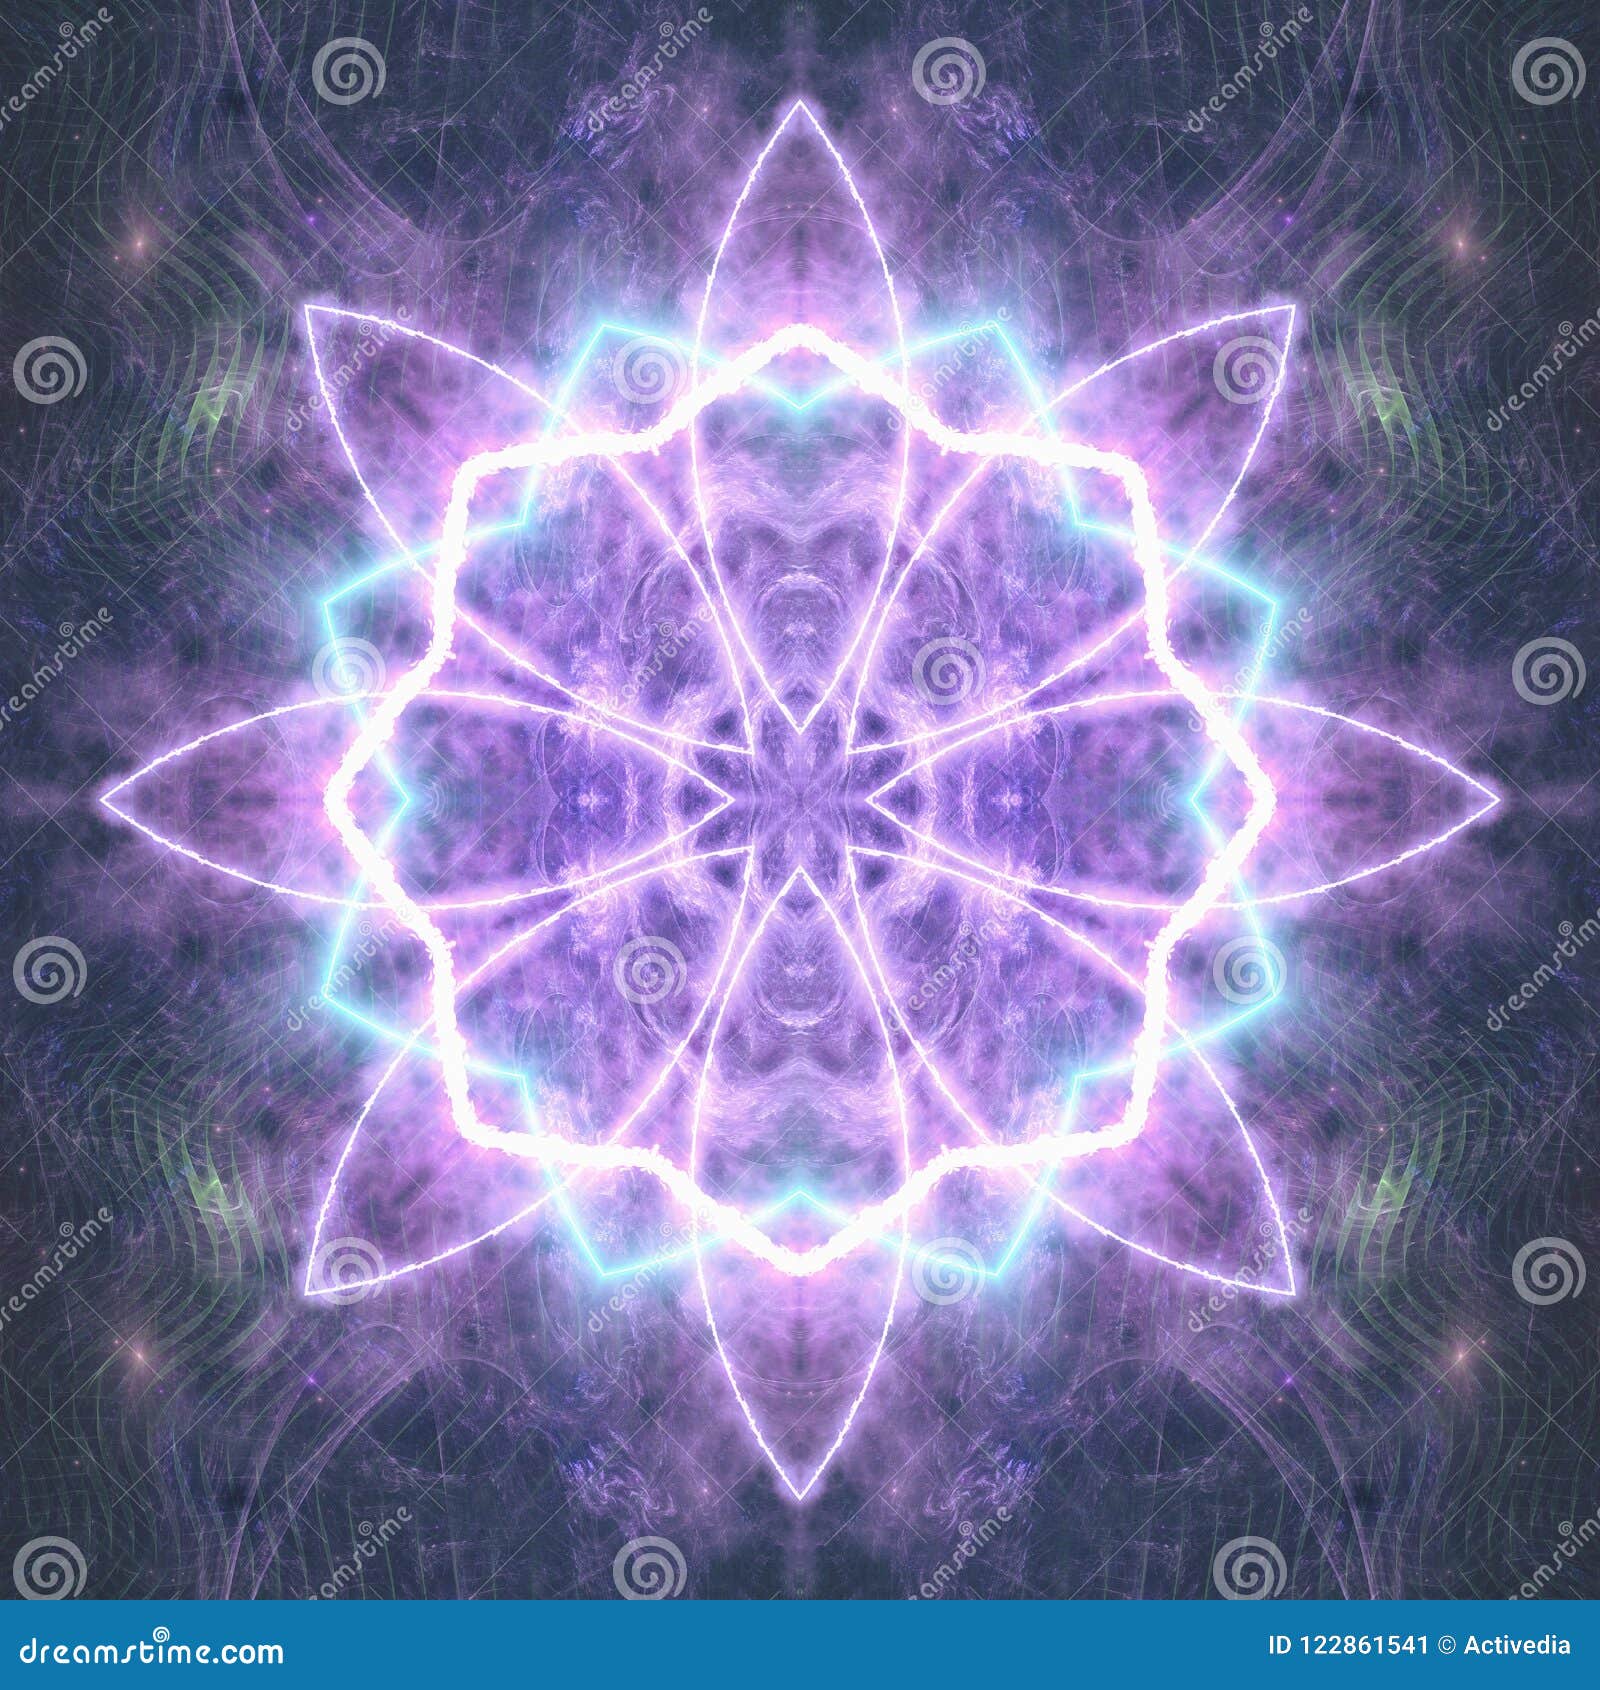 Psychedelic Music Album Cover Art Stock Illustration Illustration Of Symmetric Spirituality 122861541